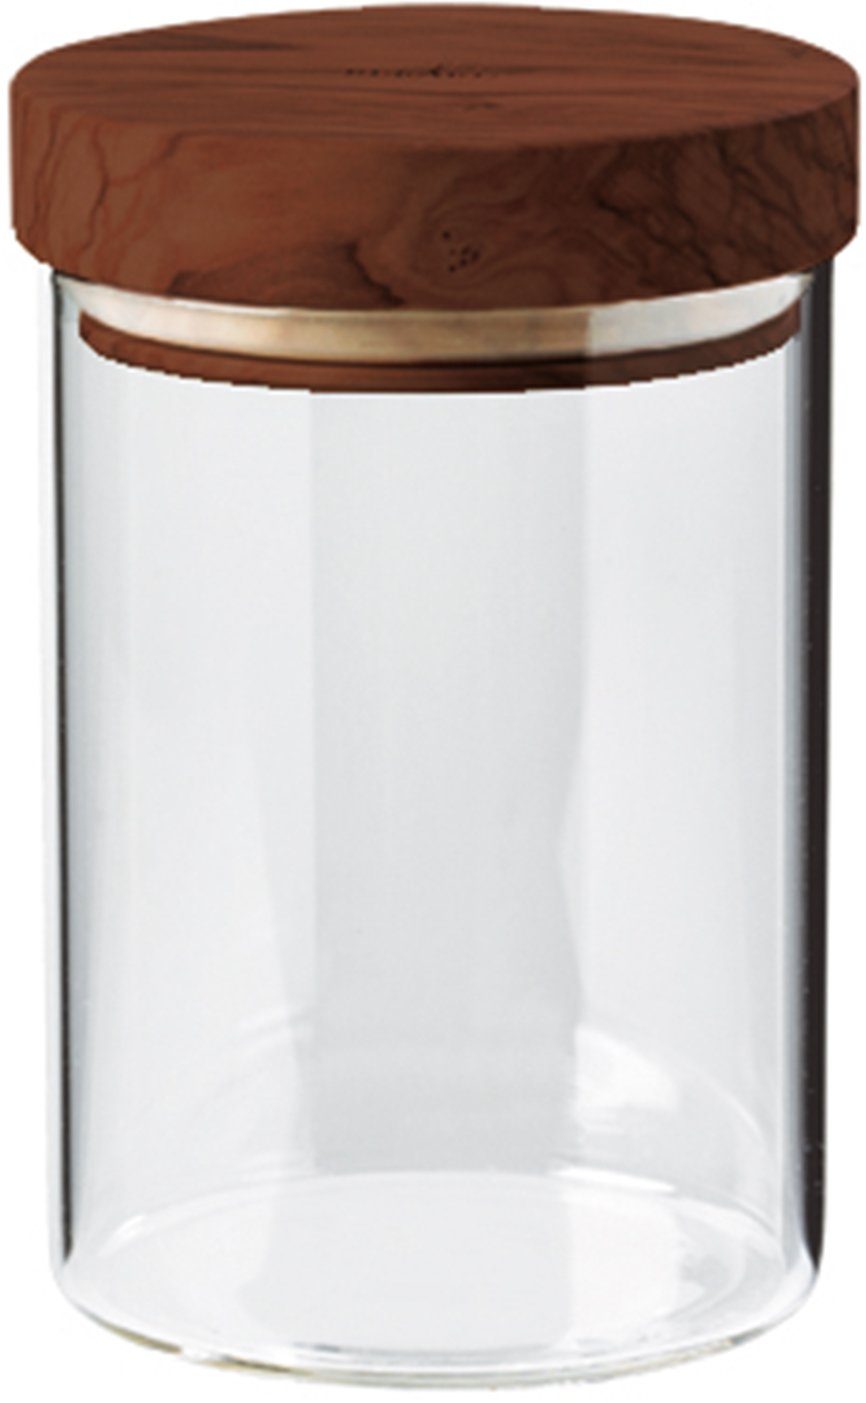 (1-tlg), 1892 Deckel Borosilikatglas, mit Walnussholz, Vorratsglas, FRANCE BERARD